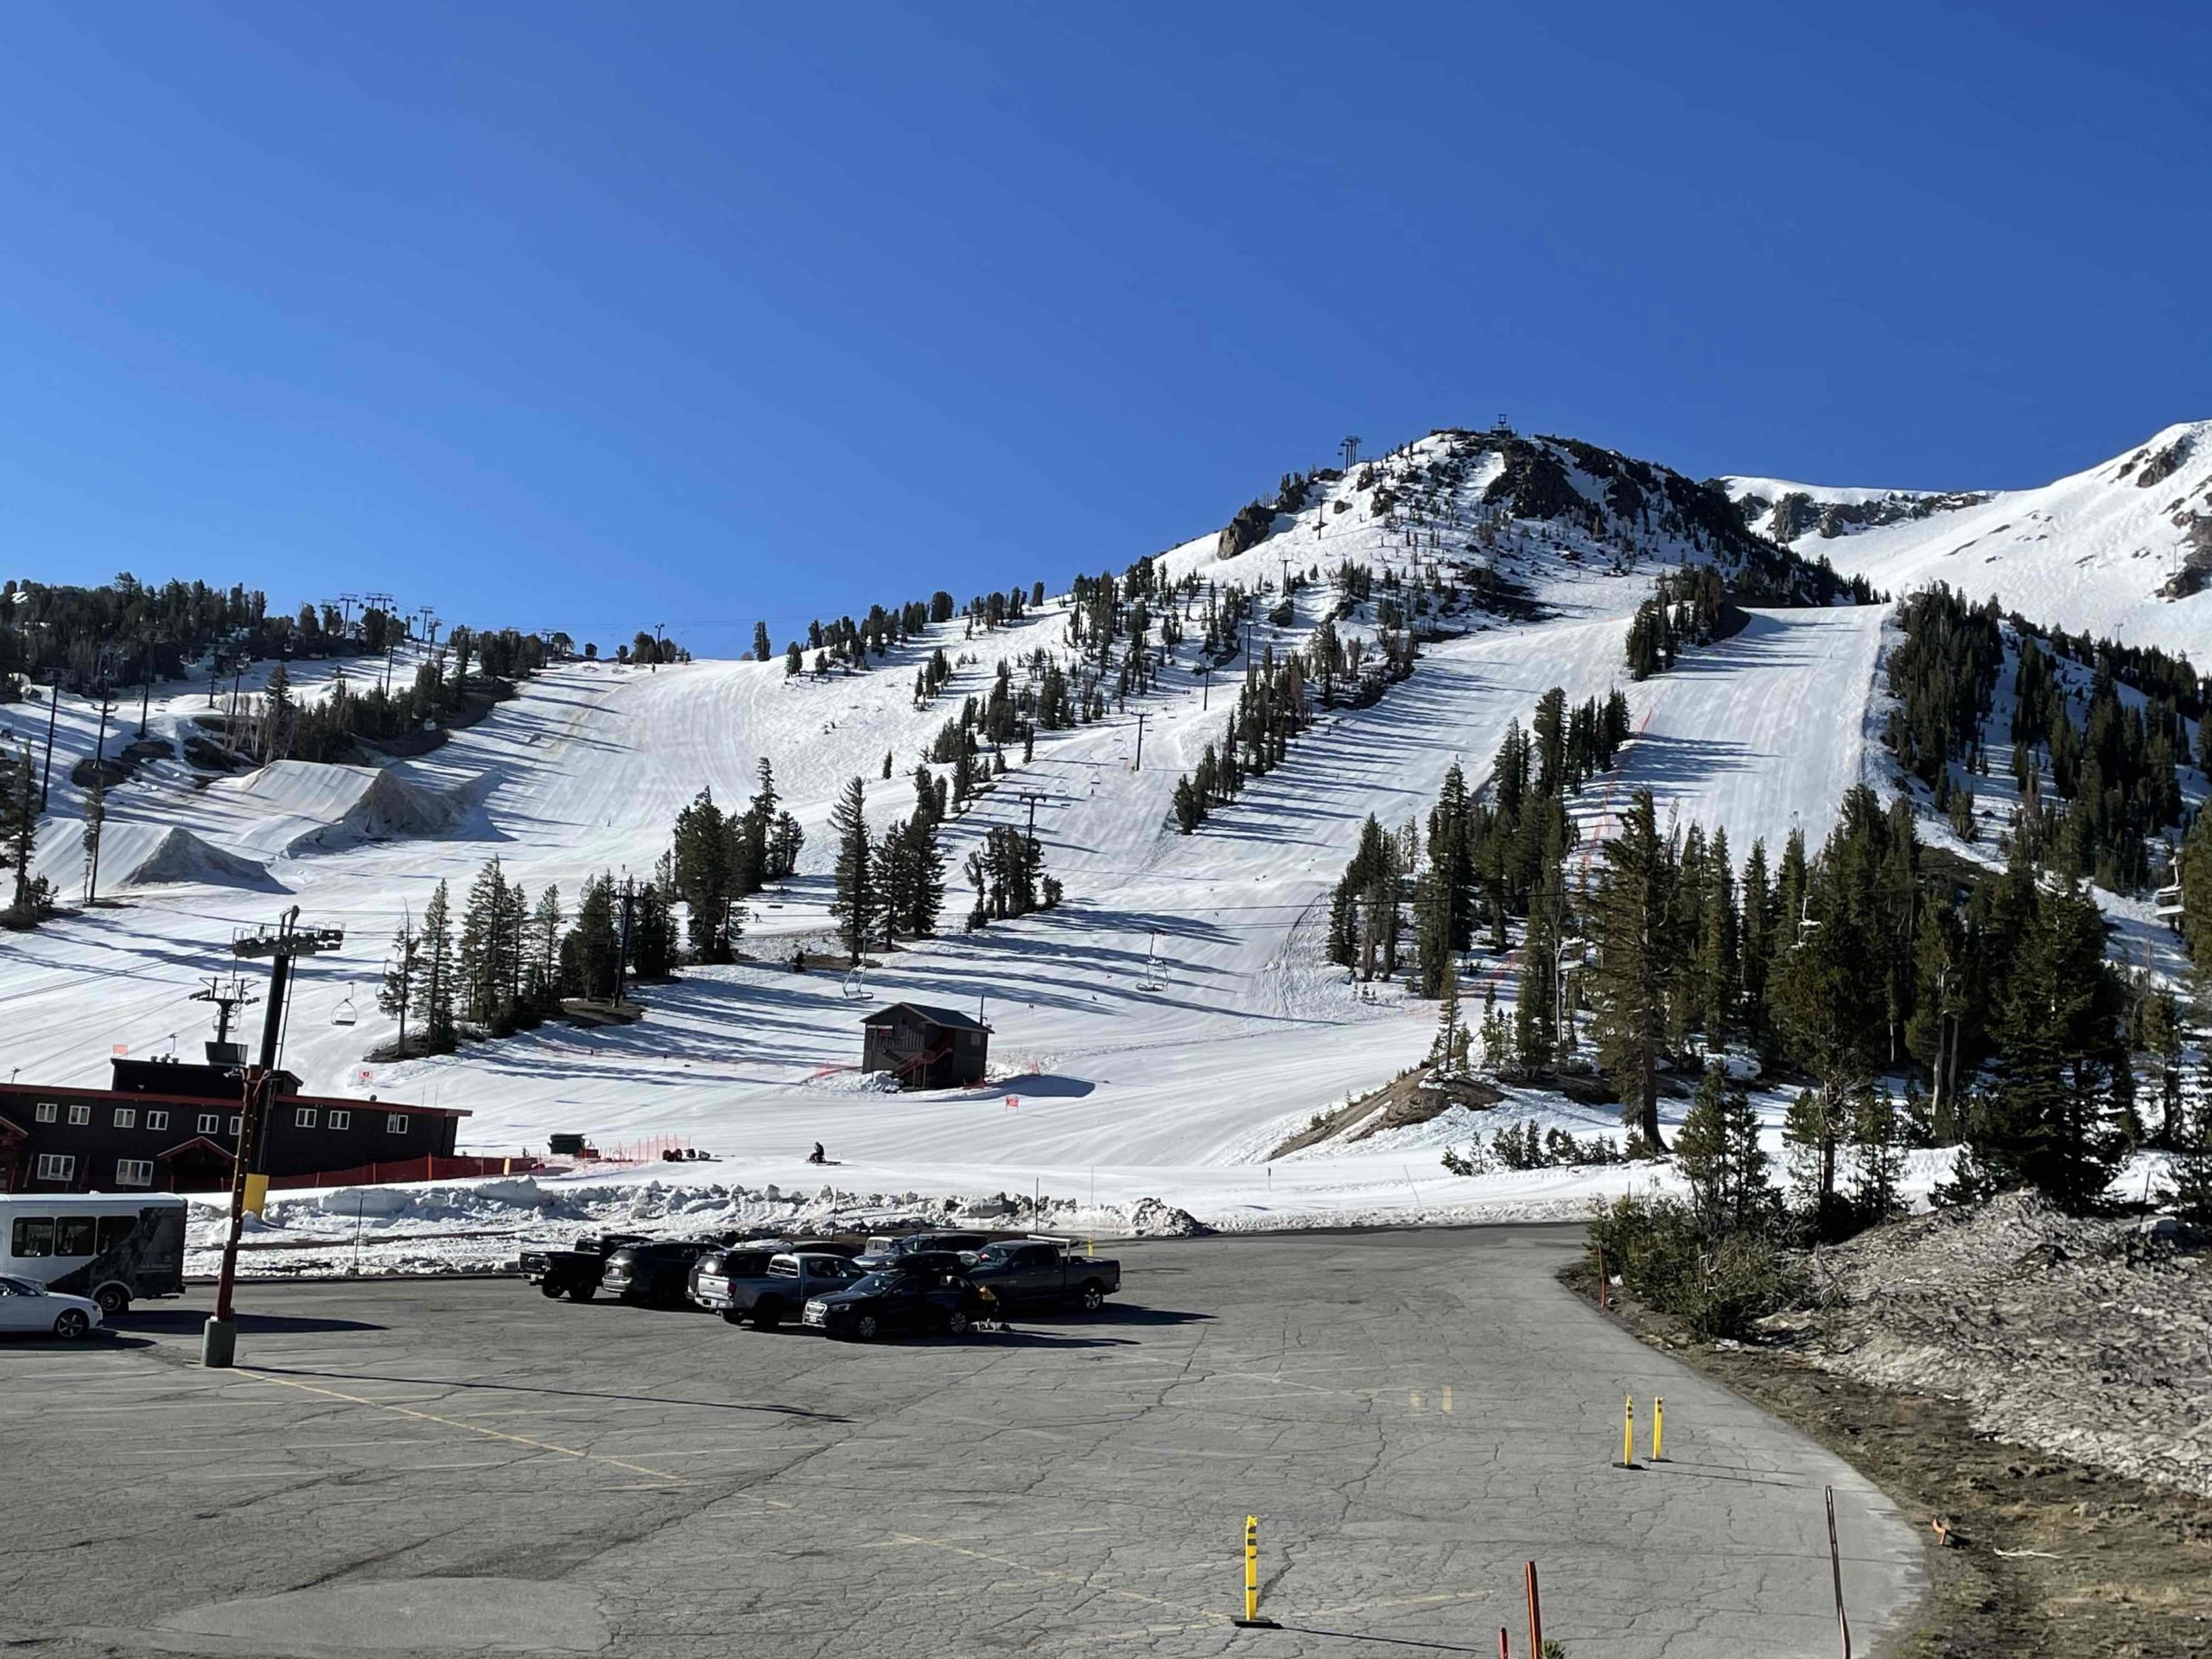 Mammoth Mountain Review Ski North America's Top 100 Resorts